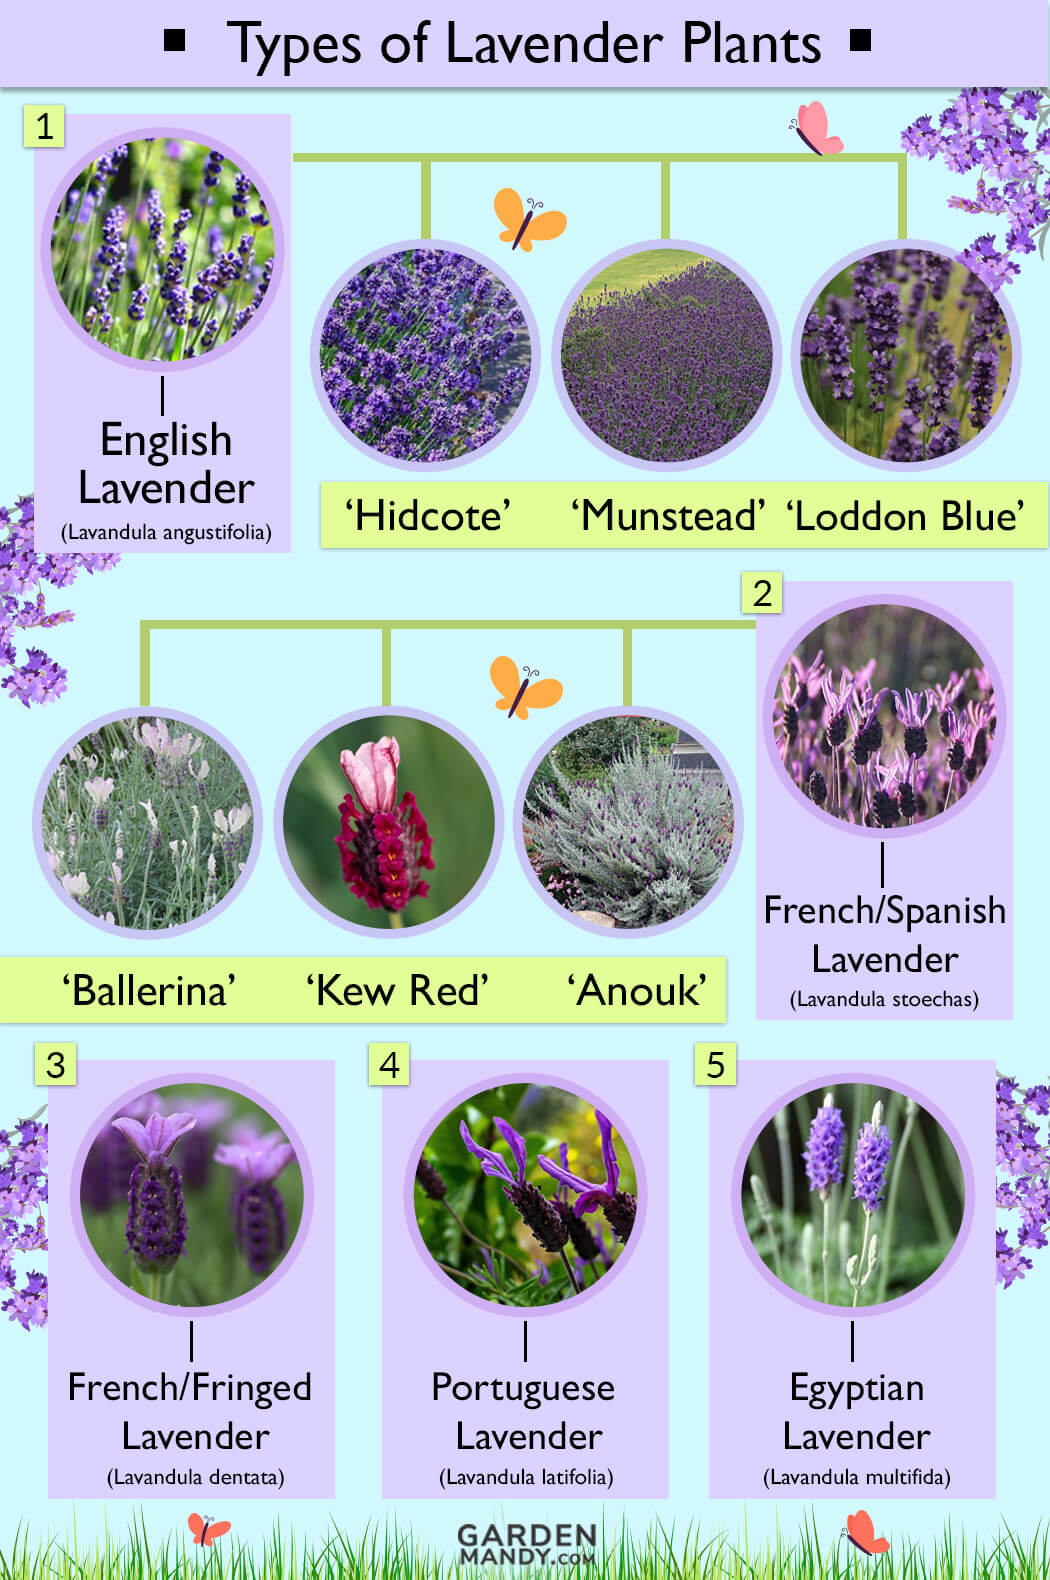 Types of Lavender